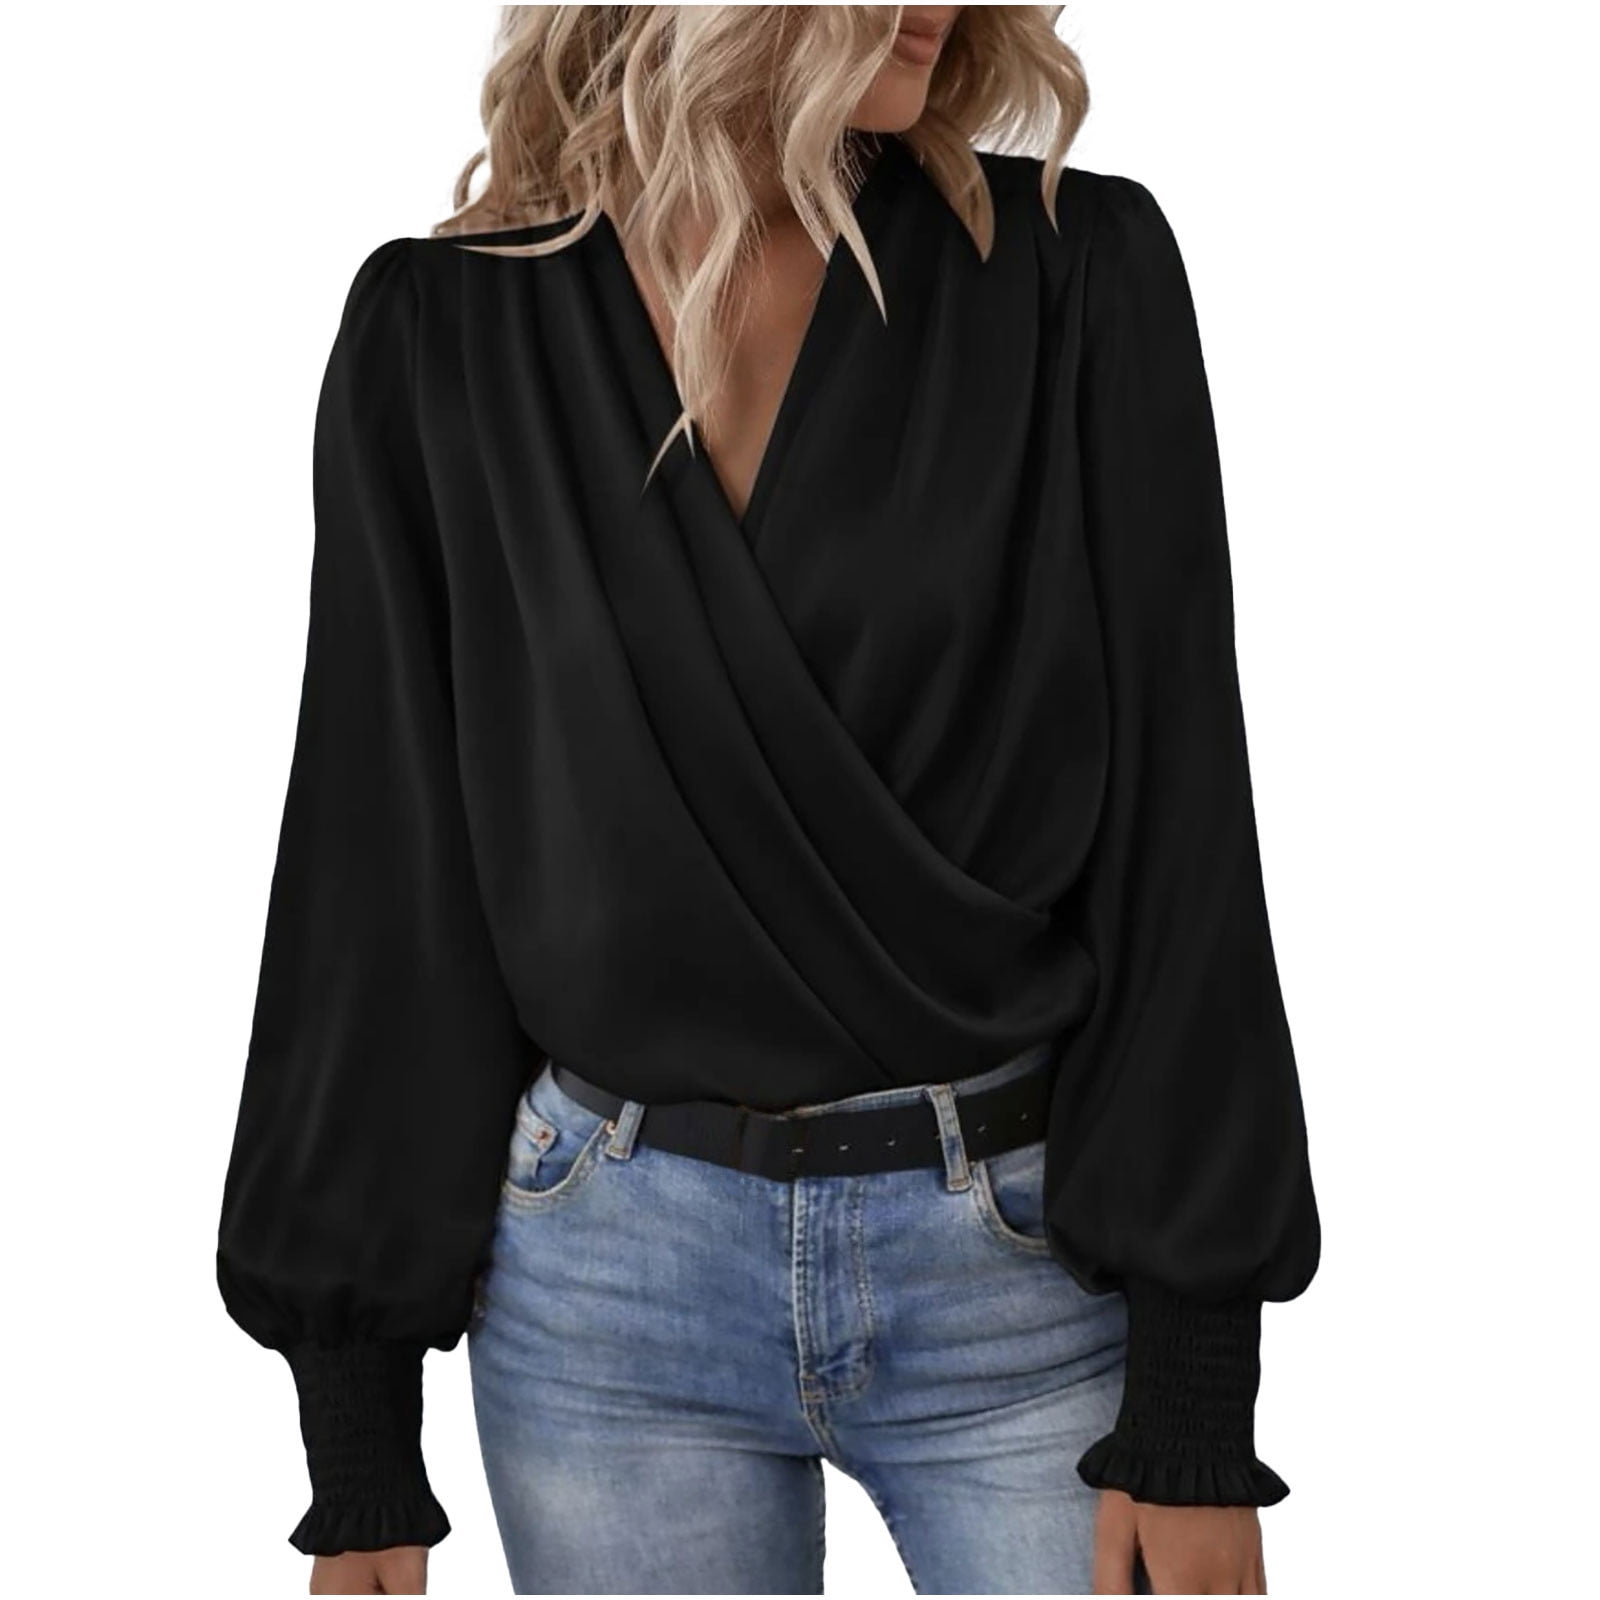 Şans Women's Black Large Size Wrap Fabric V-Neck Blouse with